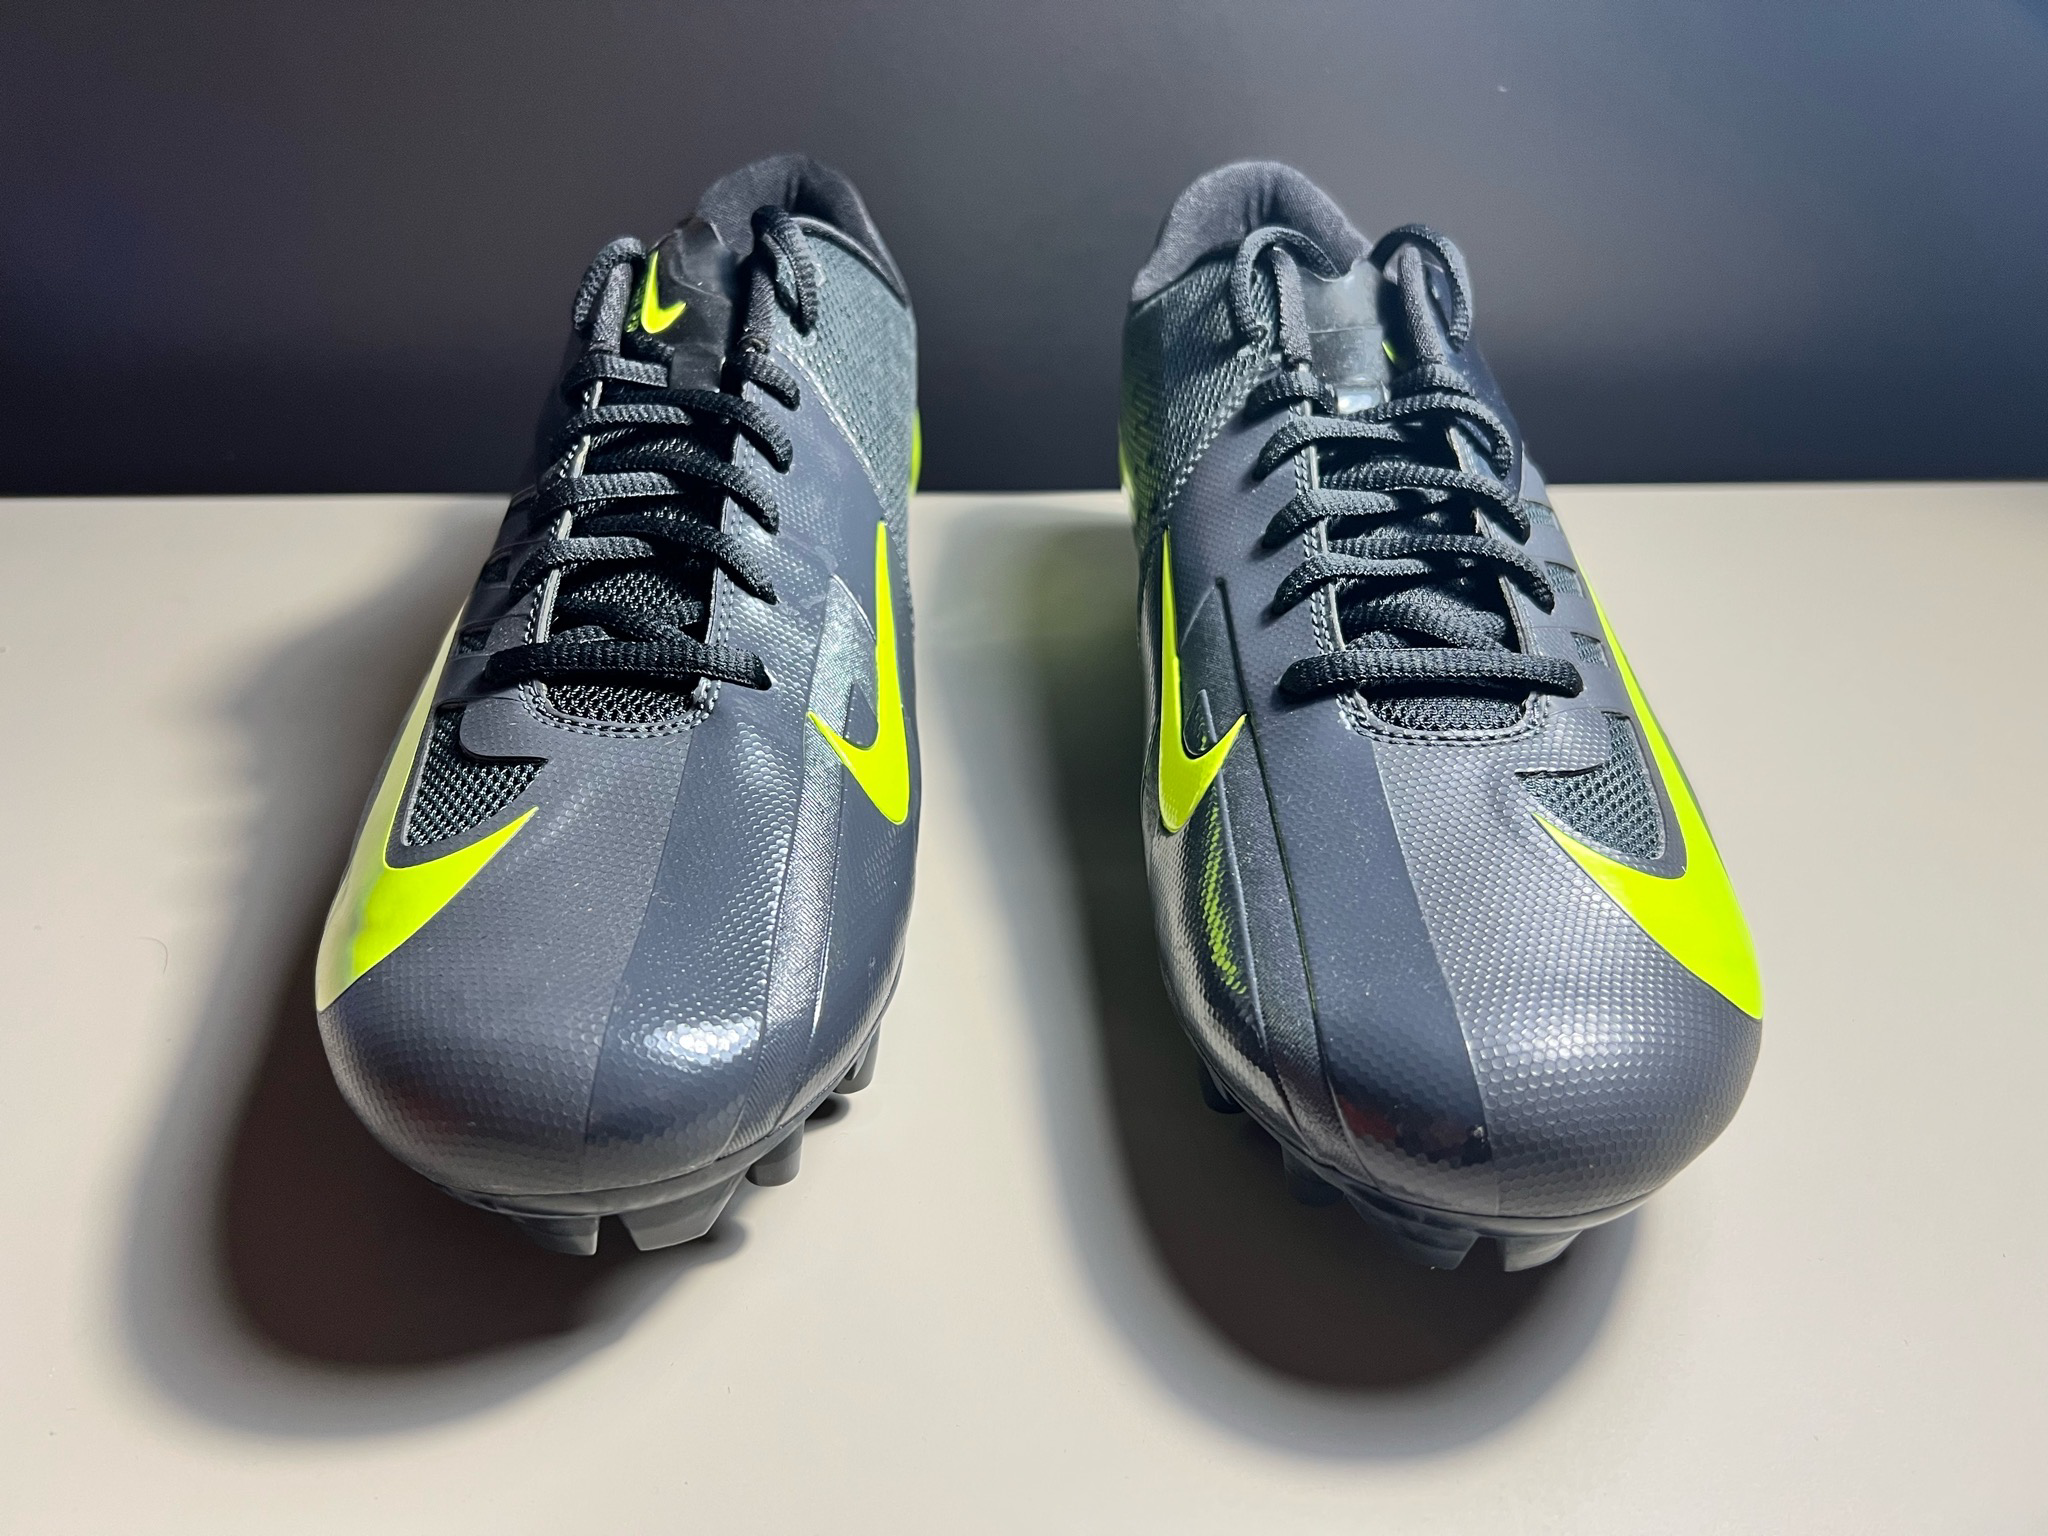 Nike Vapor Pro Low Lacrosse Cleats - Dark Gray/Volt